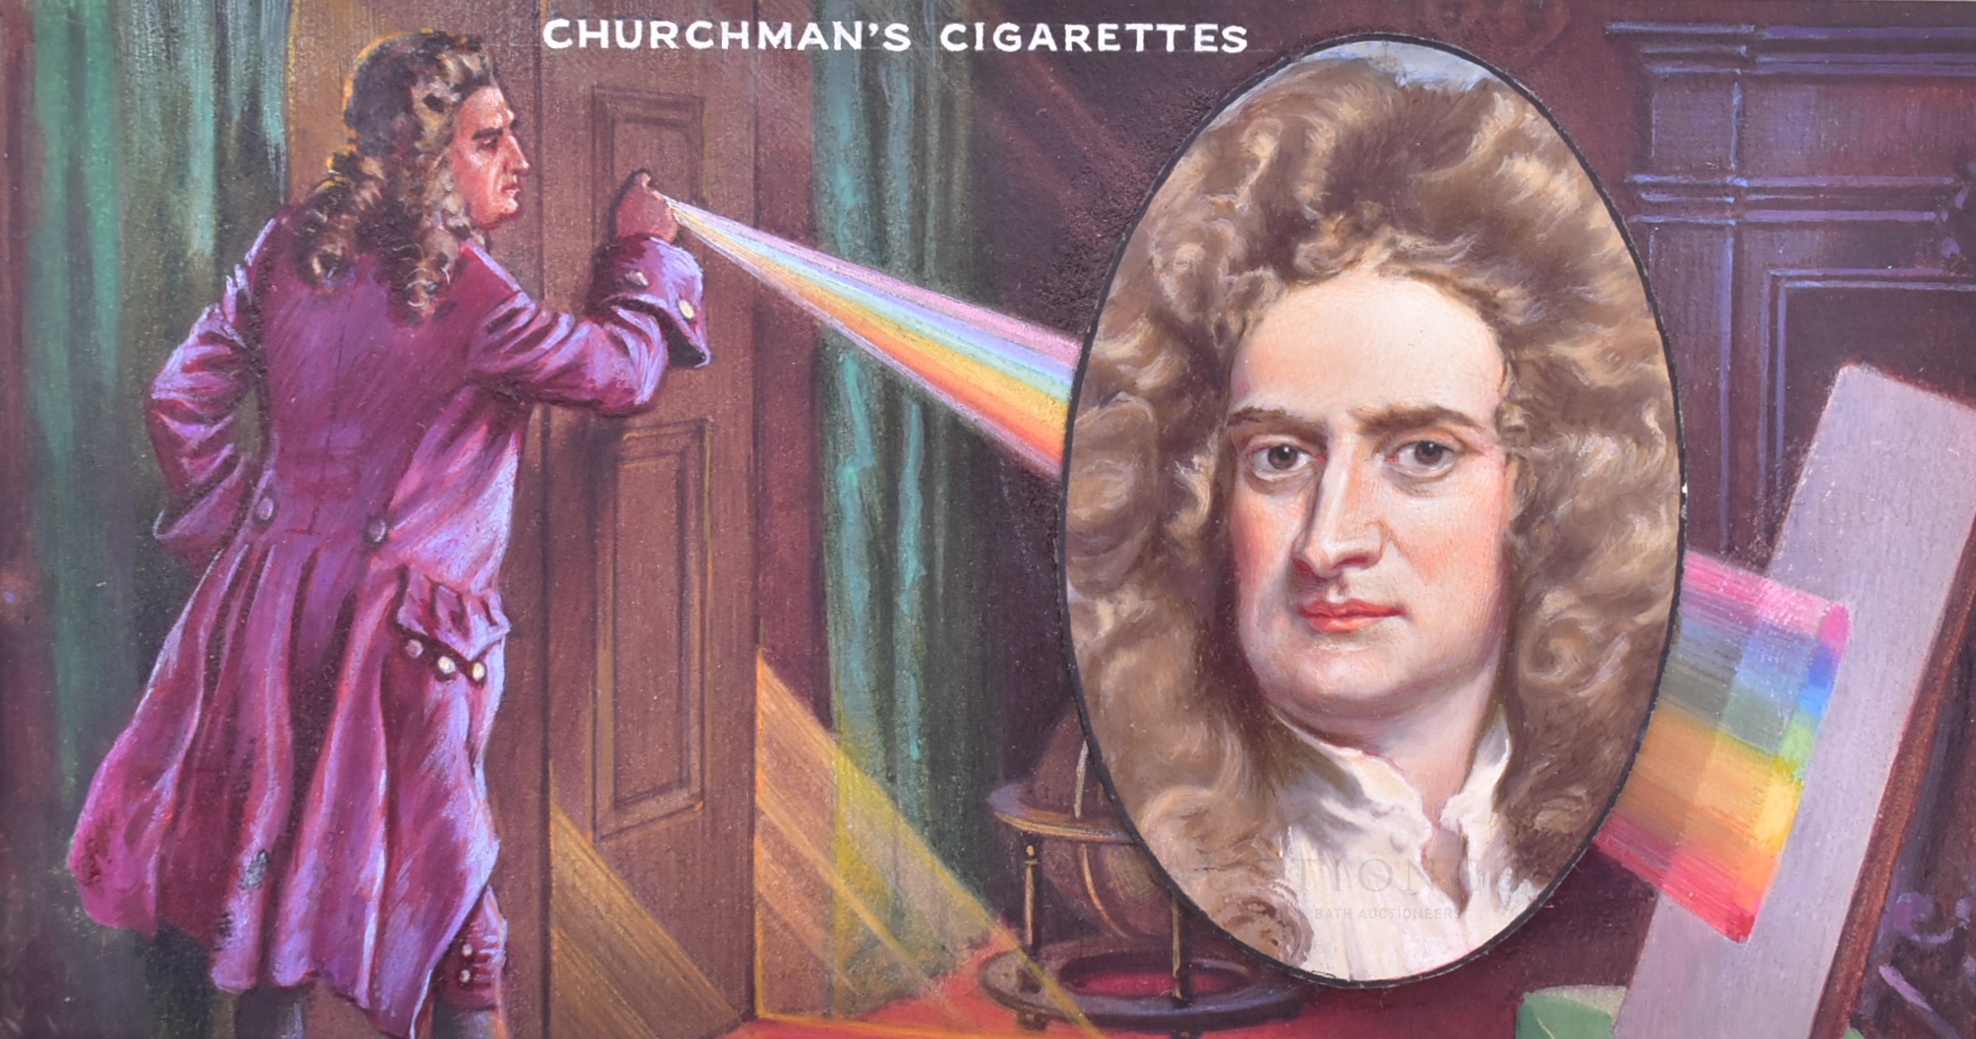 CHURCHMAN - PIONEERS (1956) - ORIGINAL CIGARETTE CARD ARTWORK - Image 3 of 6